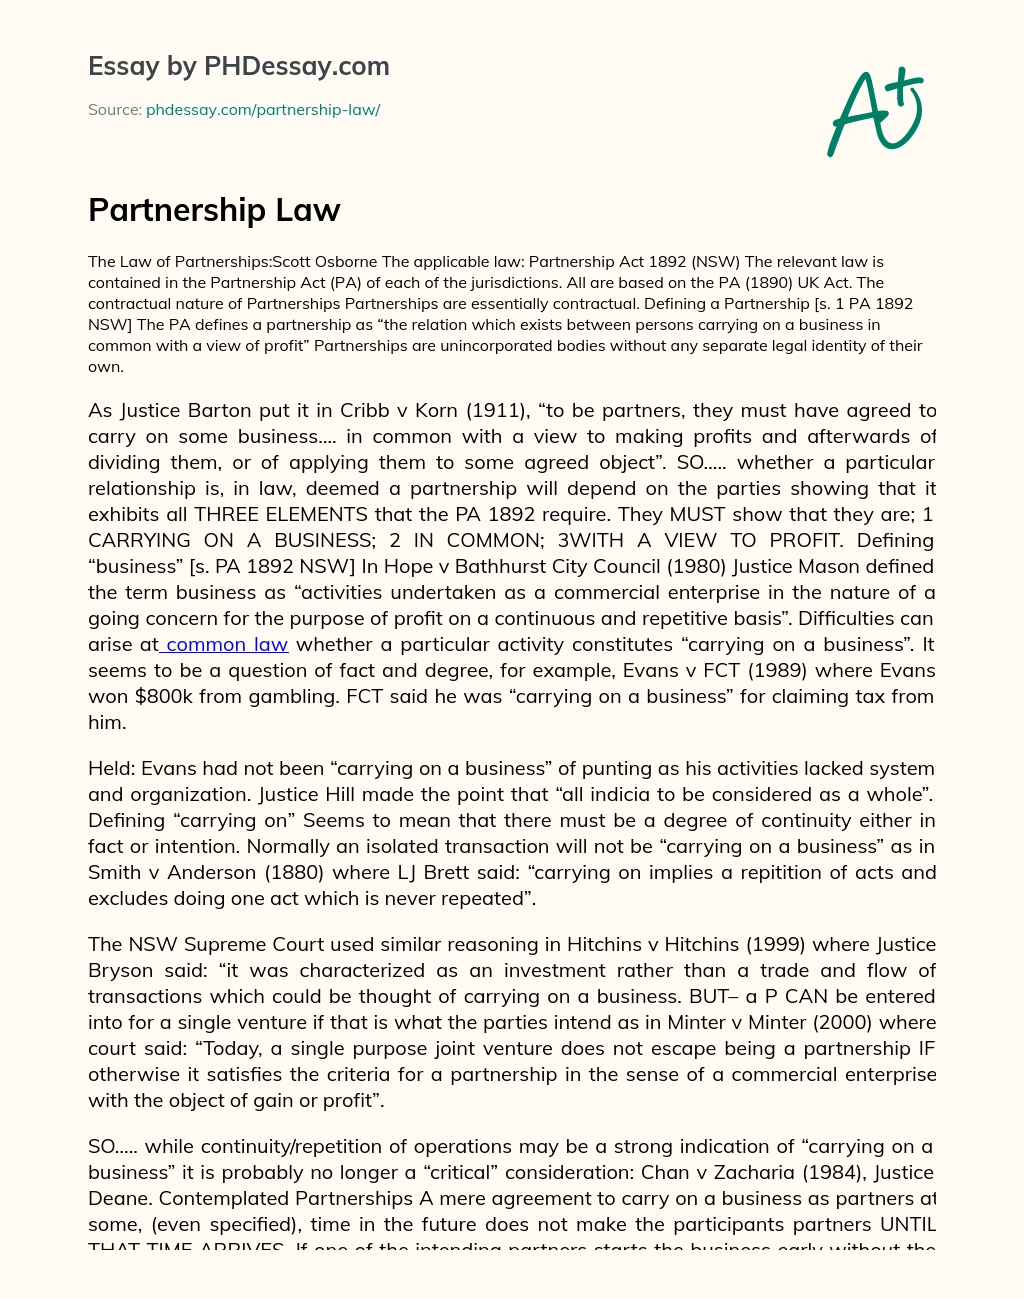 Partnership Law essay